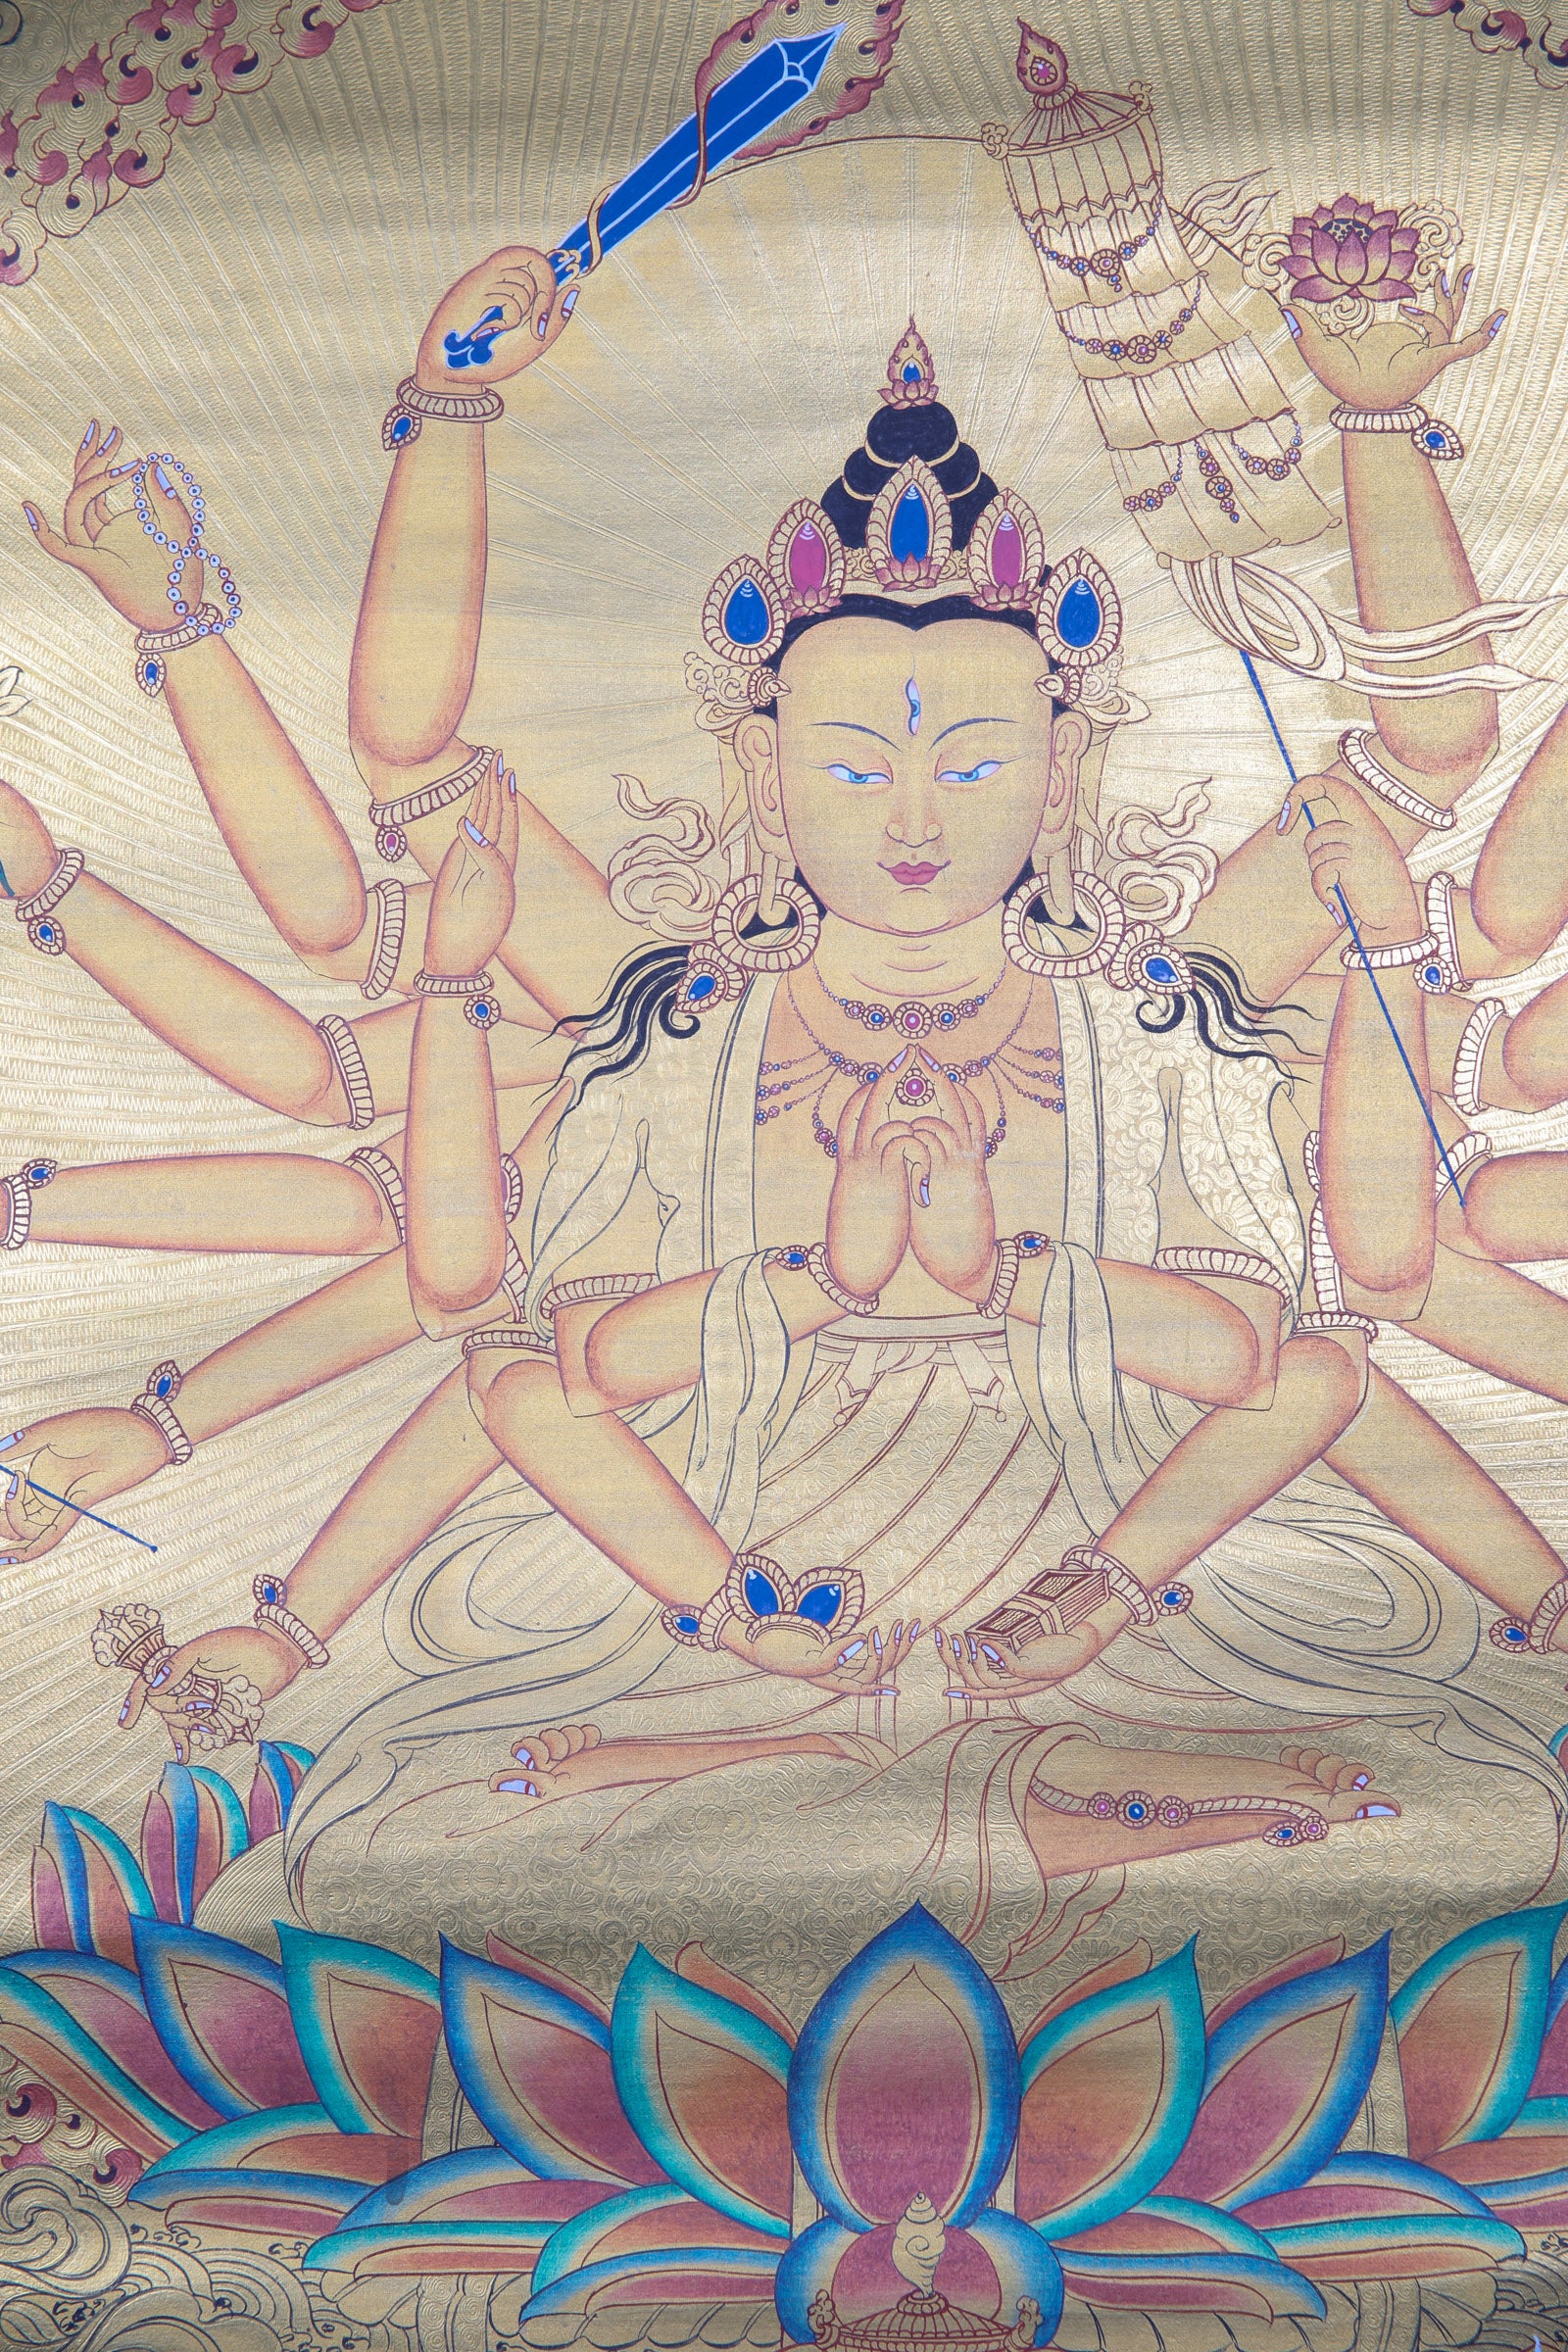 Chundi Thangka Painting for wisdom and compassion.